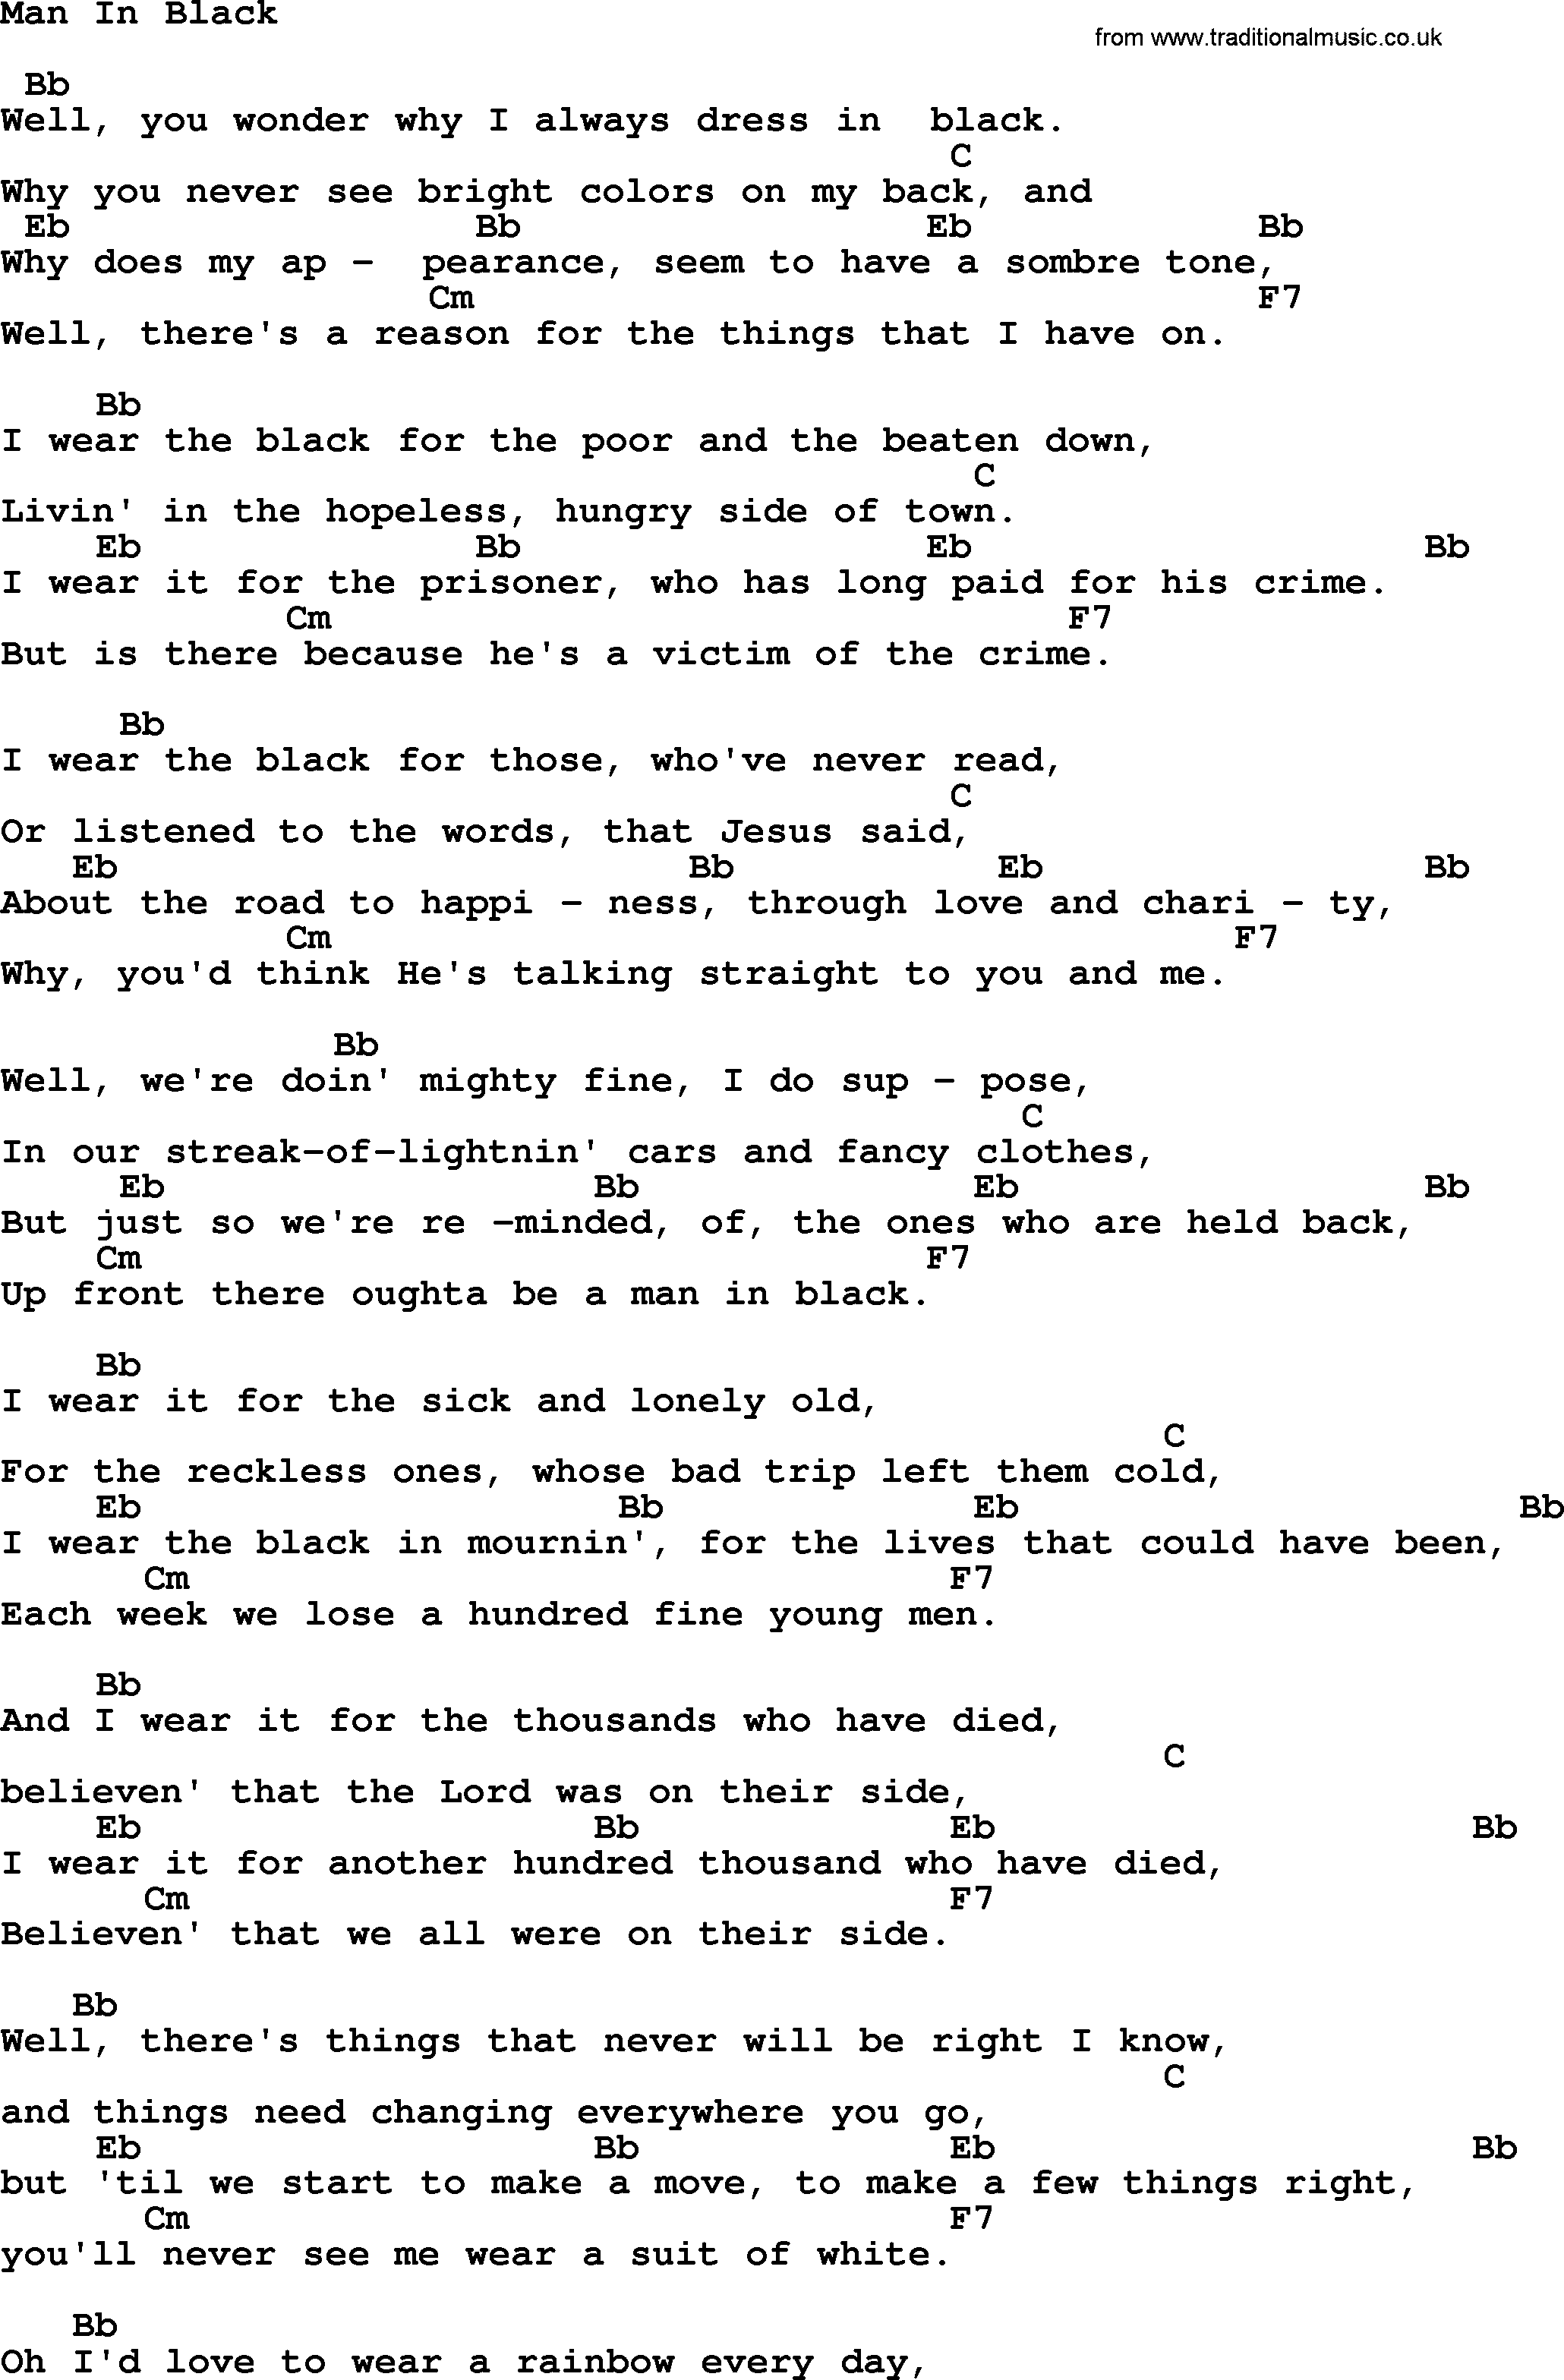 Johnny Cash song Man In Black, lyrics and chords